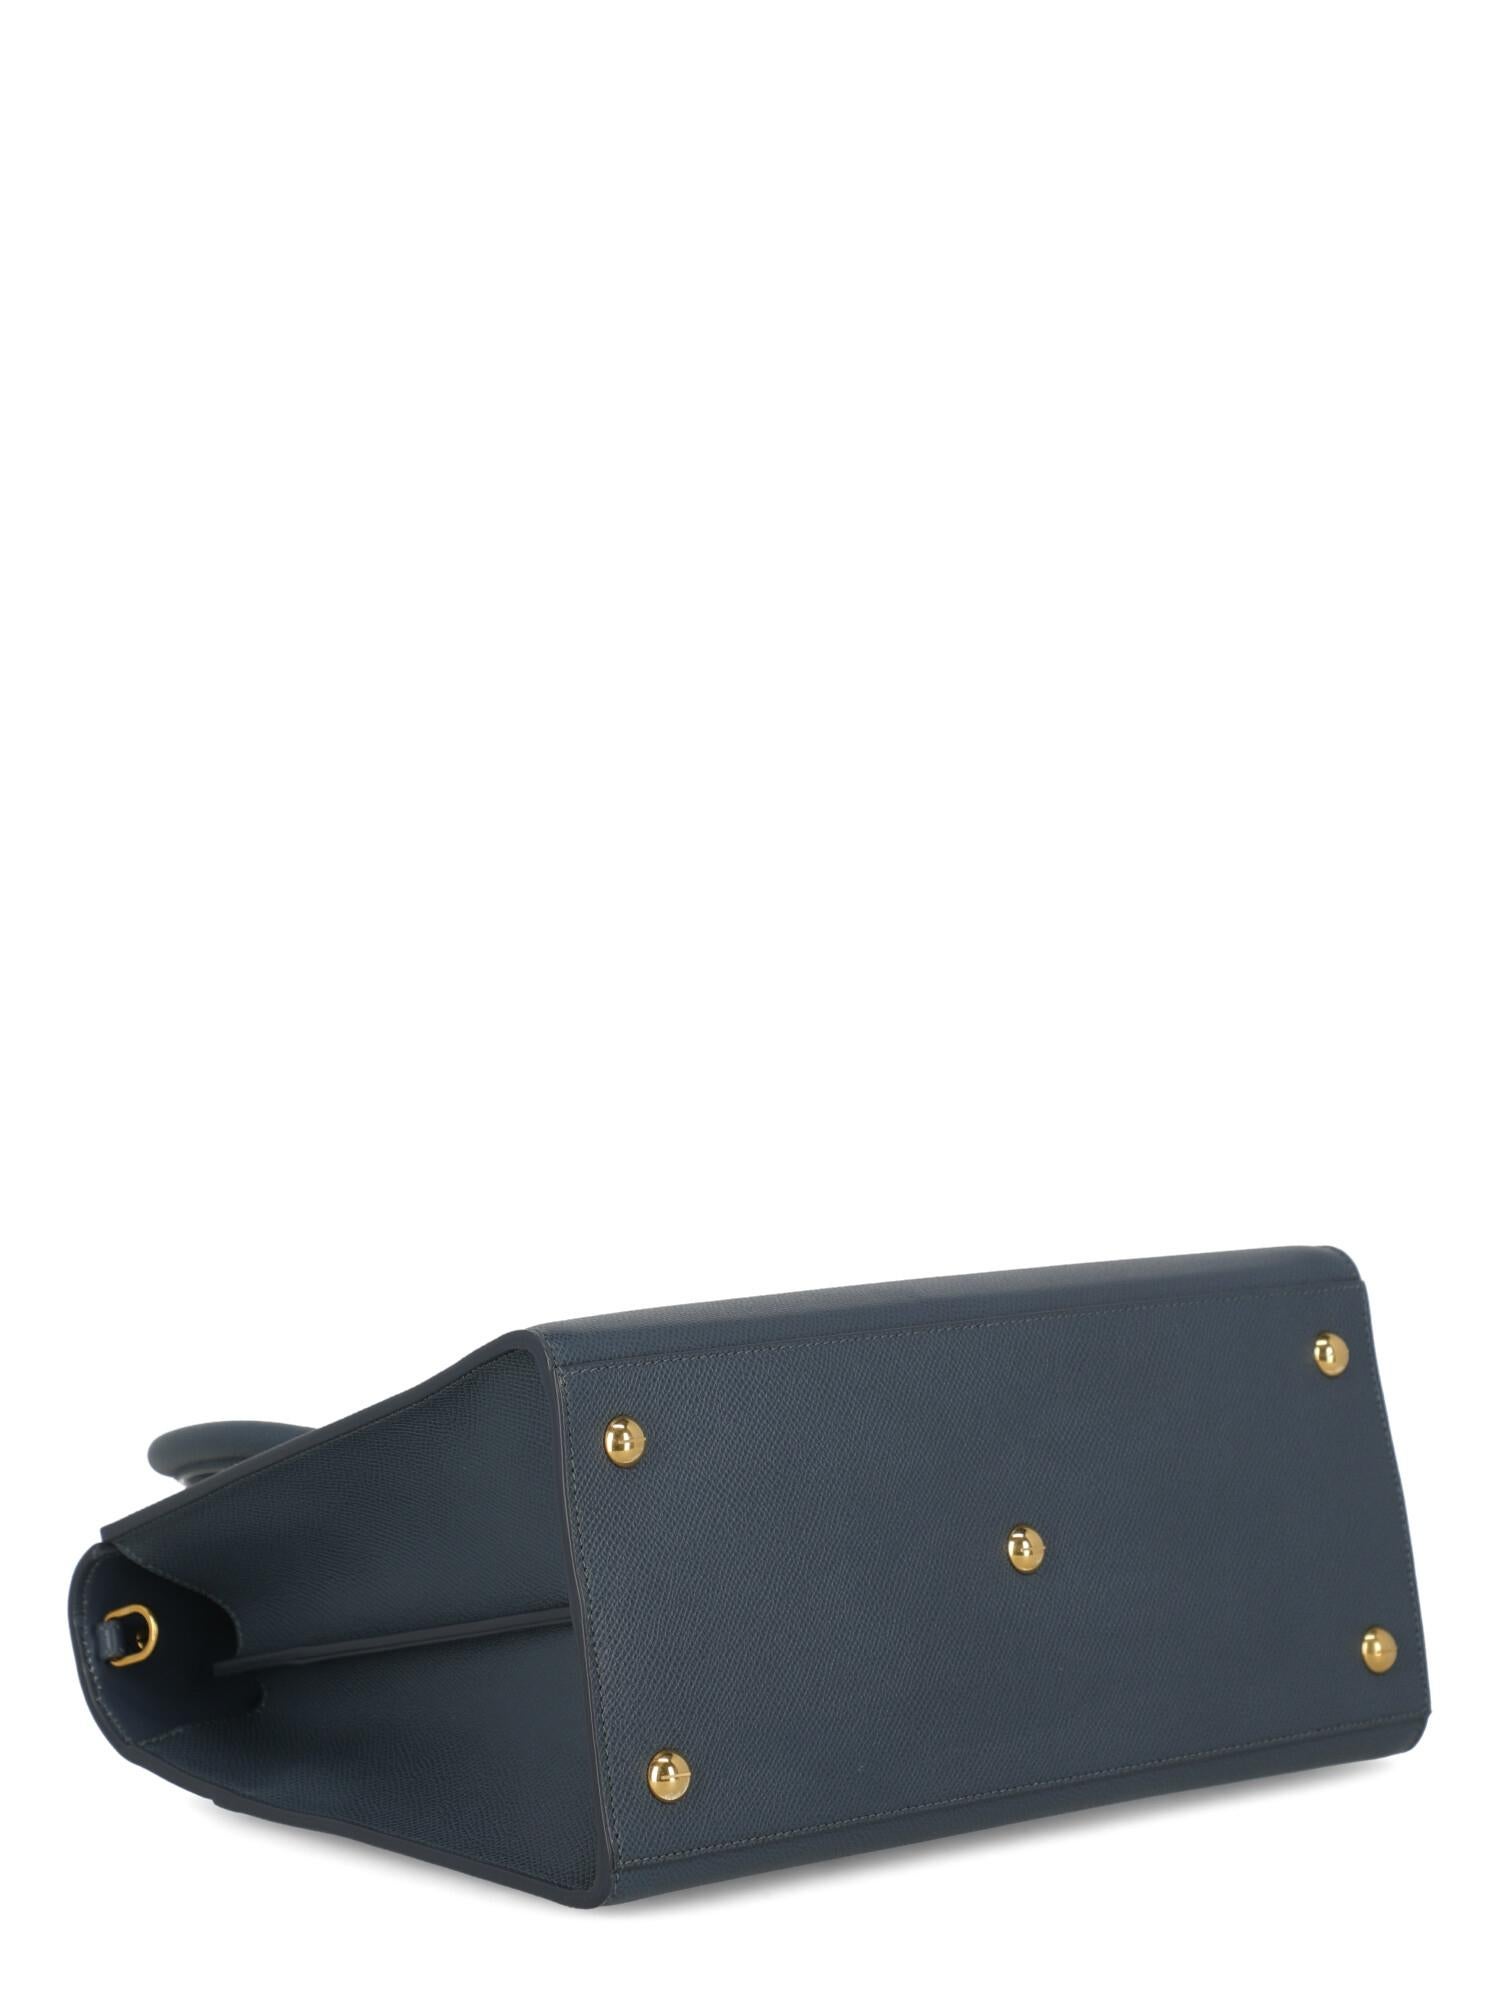 Dior Women's Handbag Navy St. Honorè Leather 1